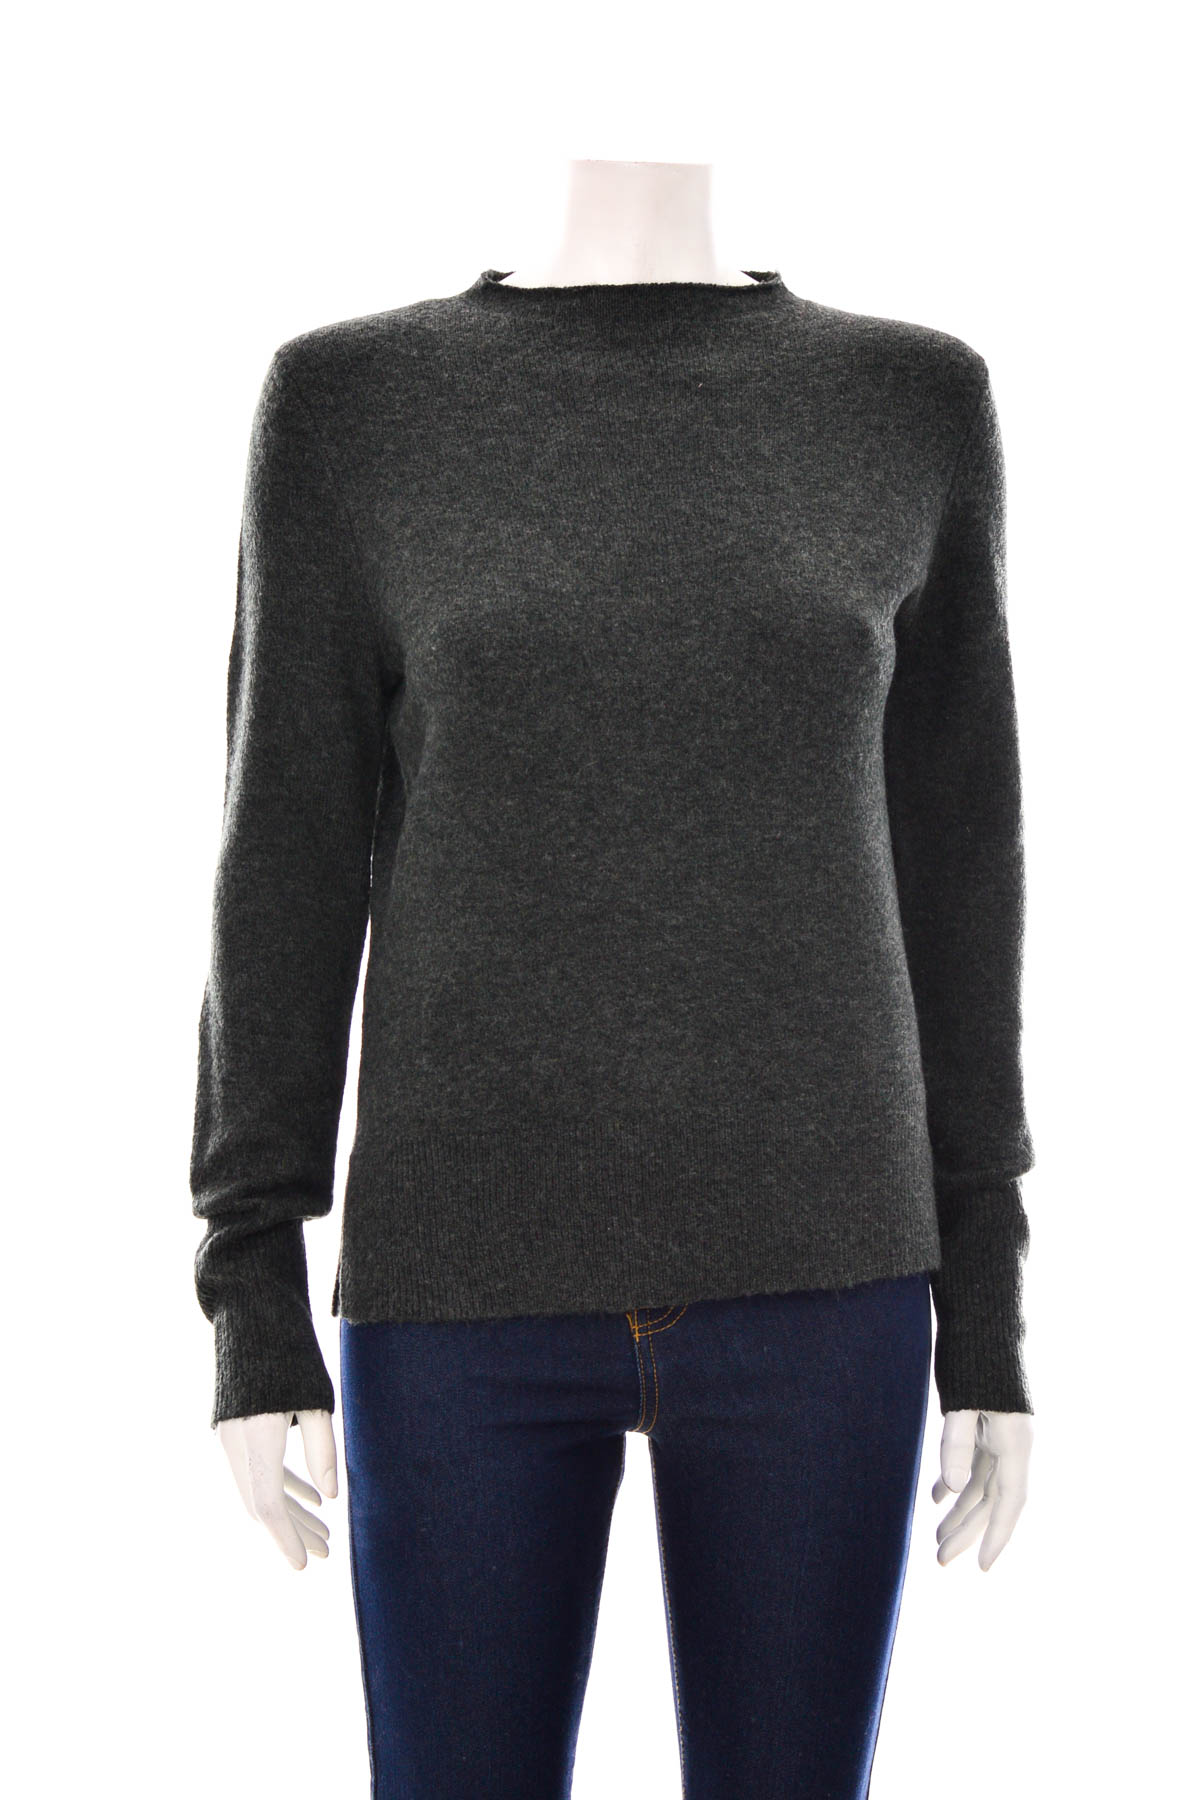 Women's sweater - TOM TAILOR Denim - 0